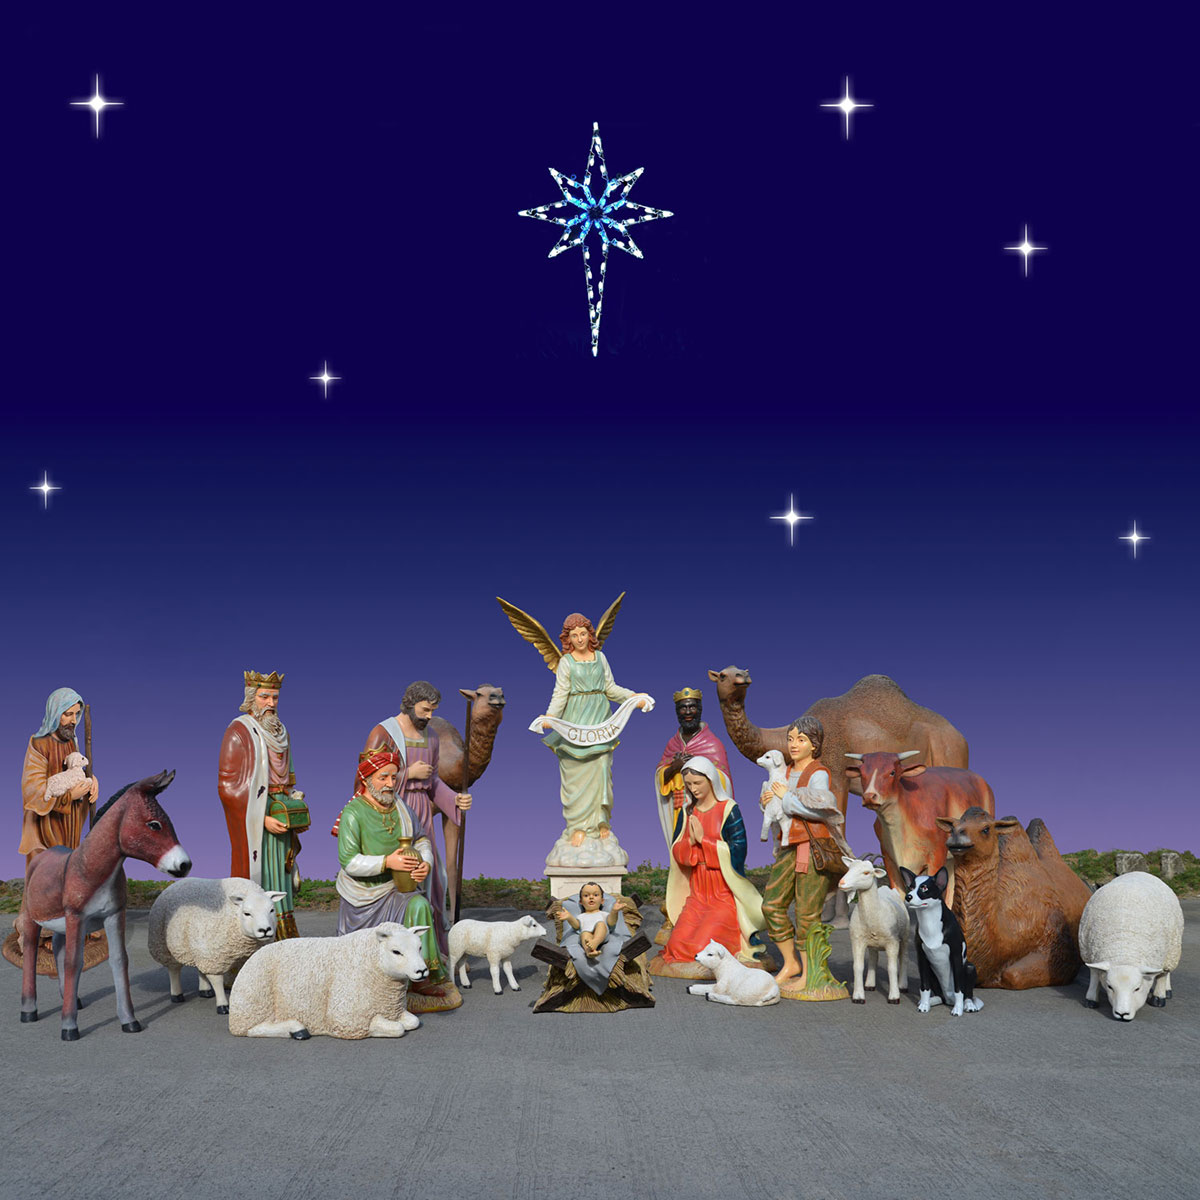 Set of large outdoor Nativity scene figures